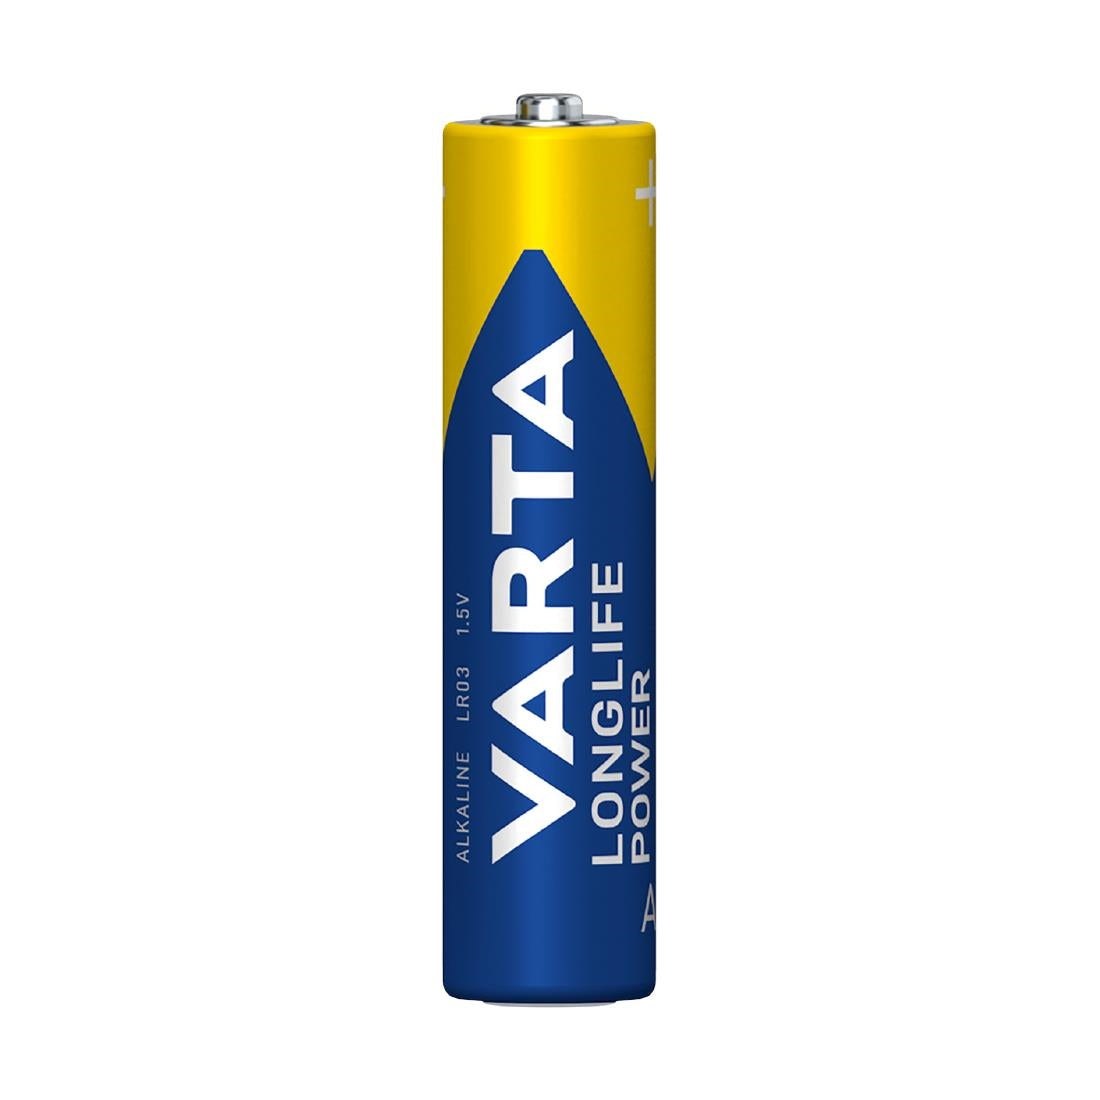 CU361 Varta Longlife Power Batteries AAA 4+4 Free Promo Pack JD Catering Equipment Solutions Ltd